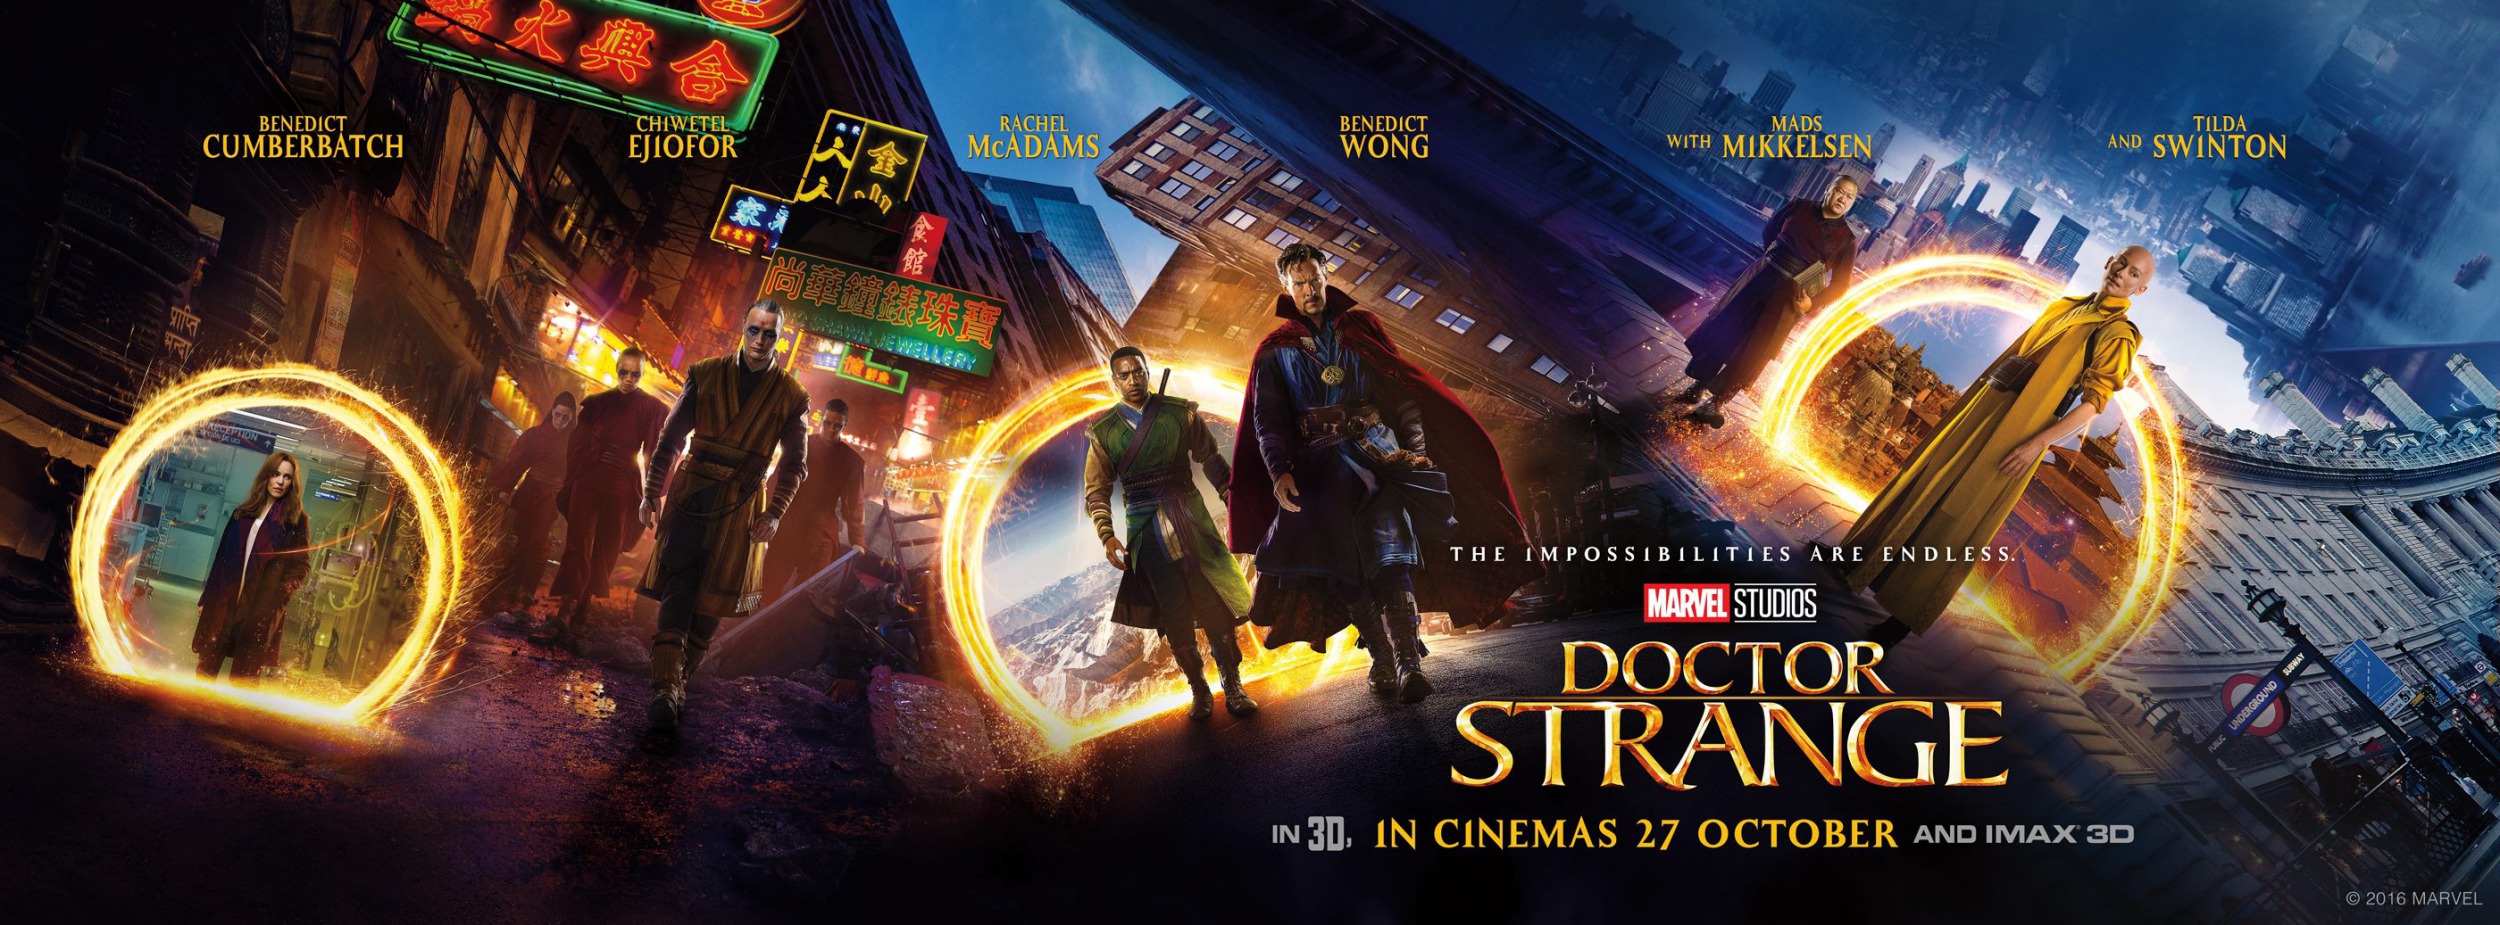 Mega Sized Movie Poster Image for Doctor Strange (#22 of 29)